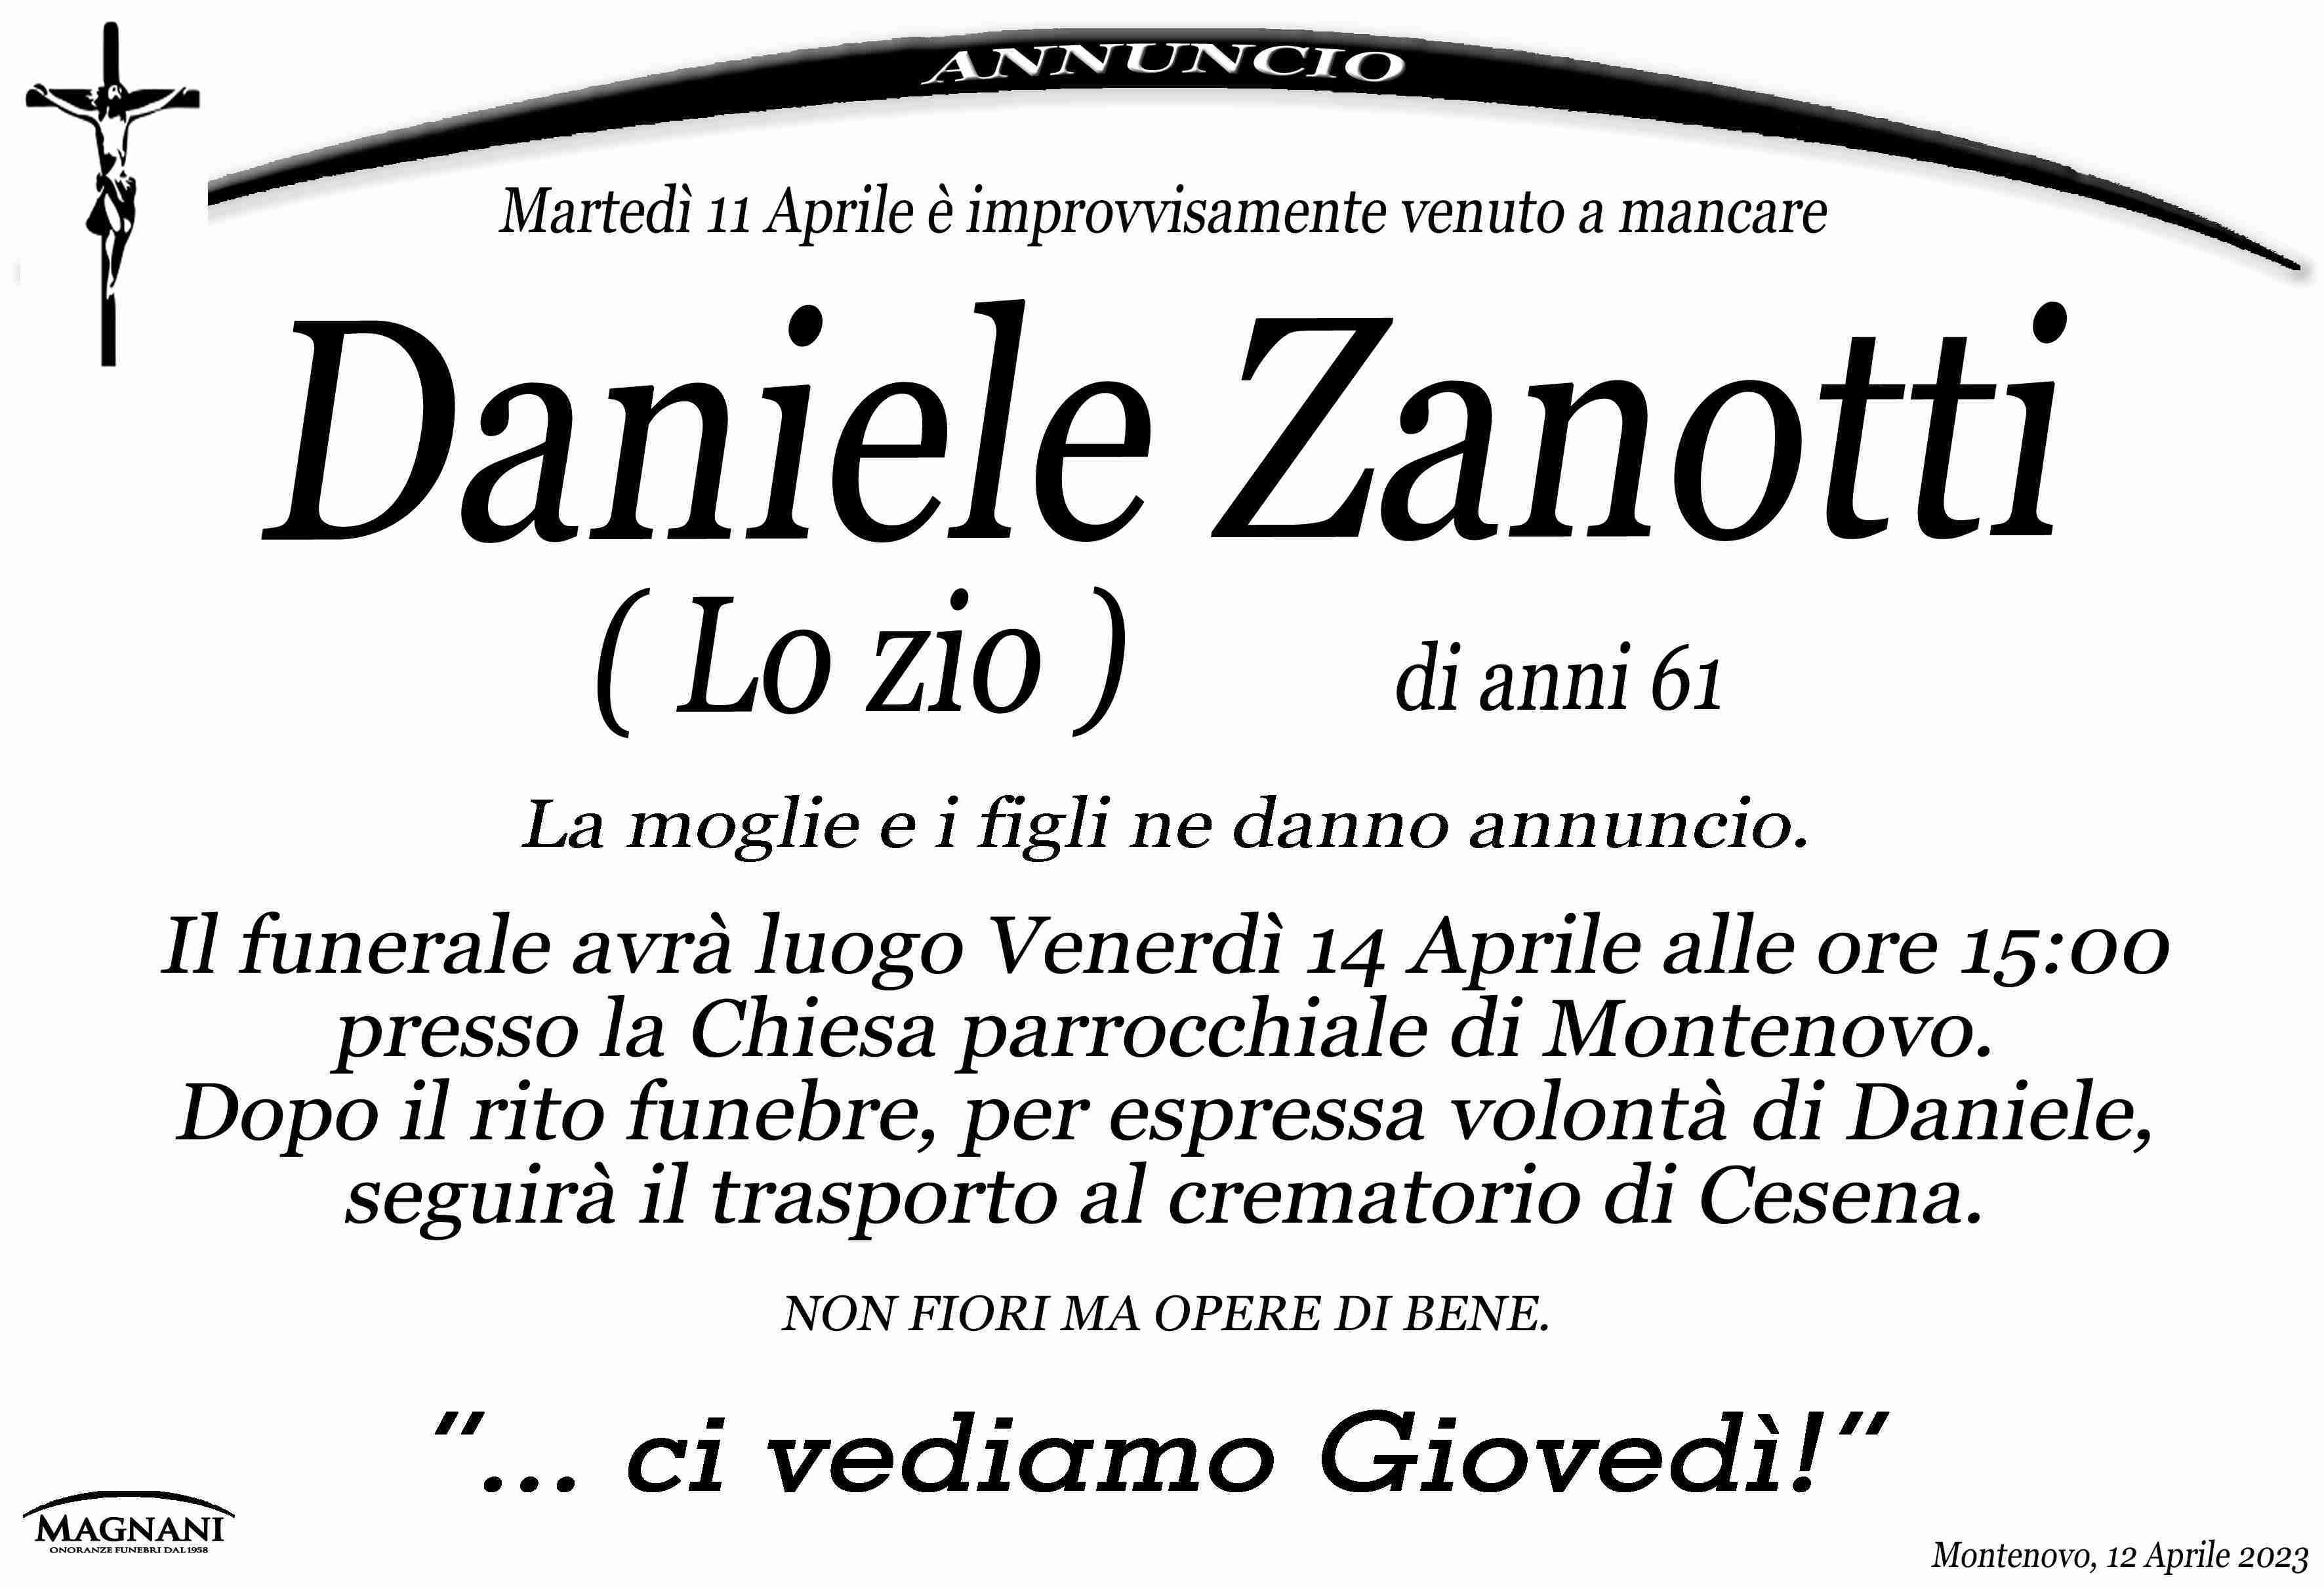 Daniele Zanotti